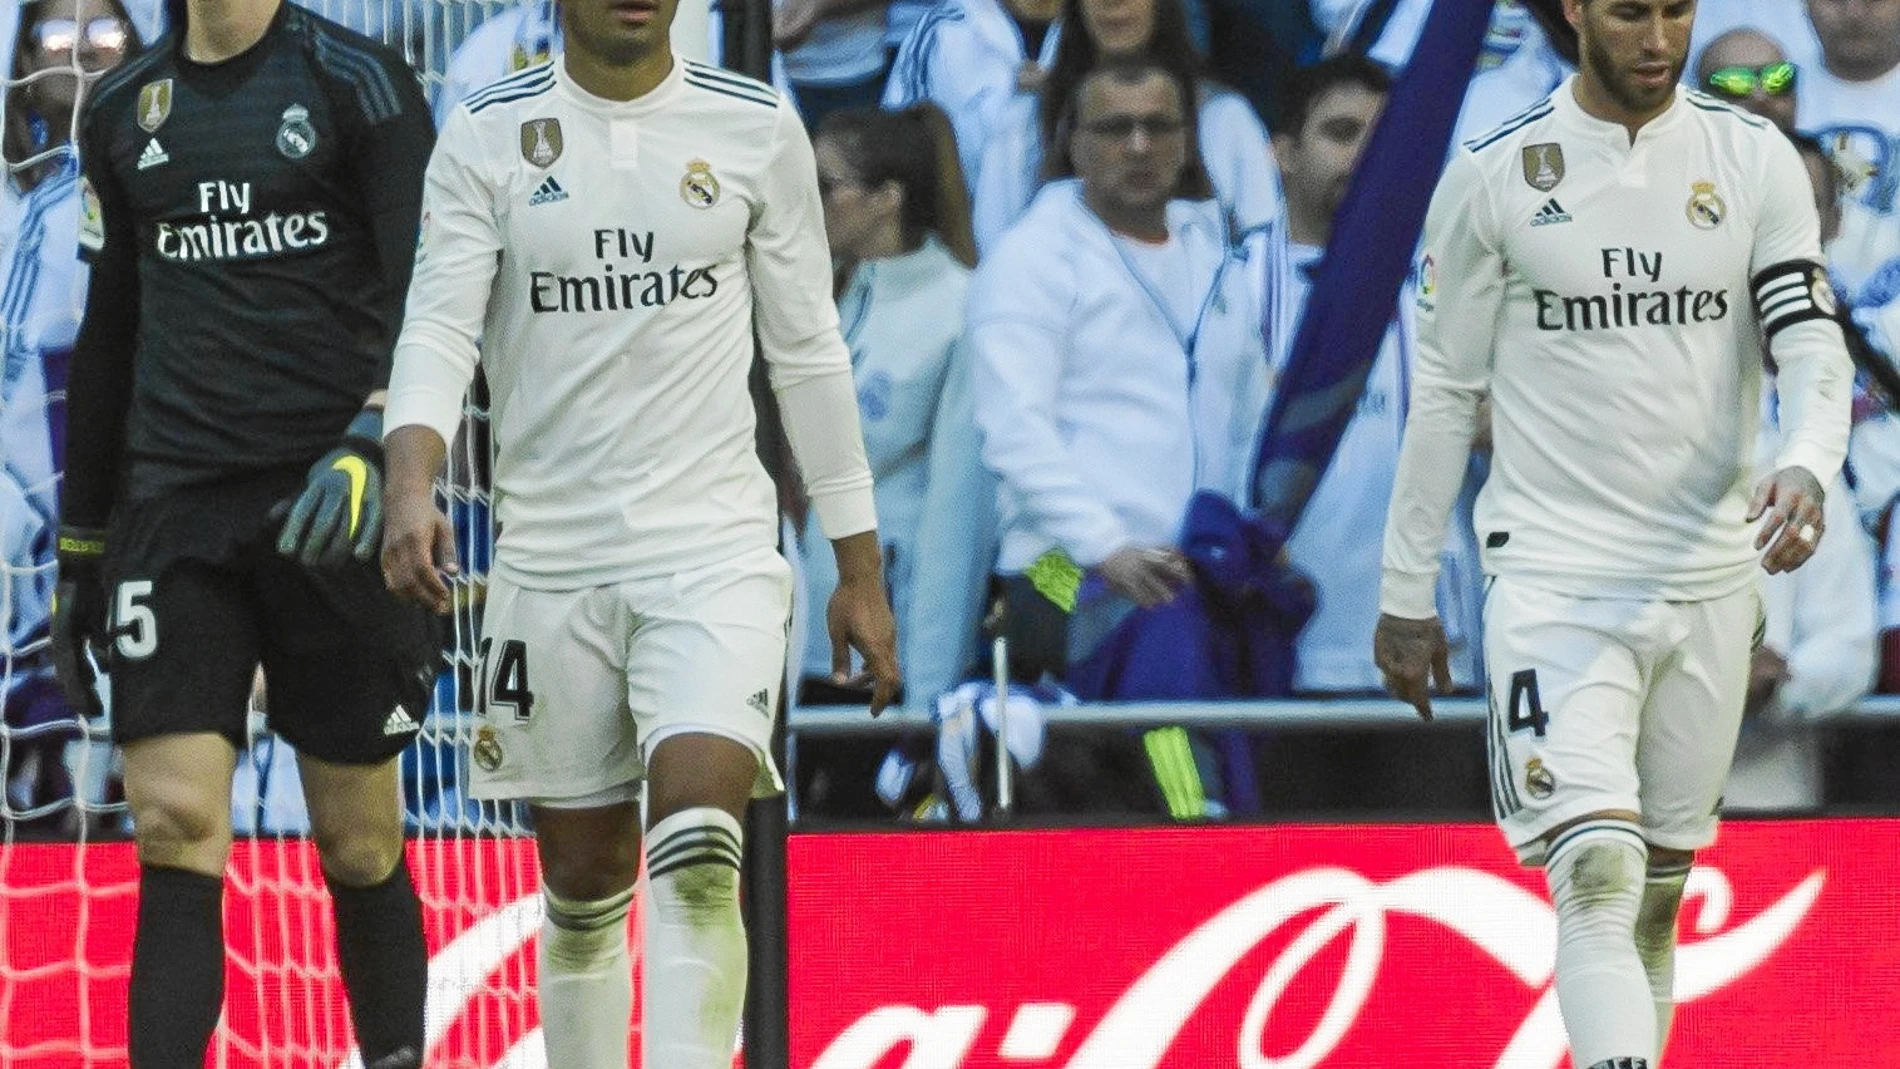 Cara a cara: ¿Ha tirado el Madrid la Liga?